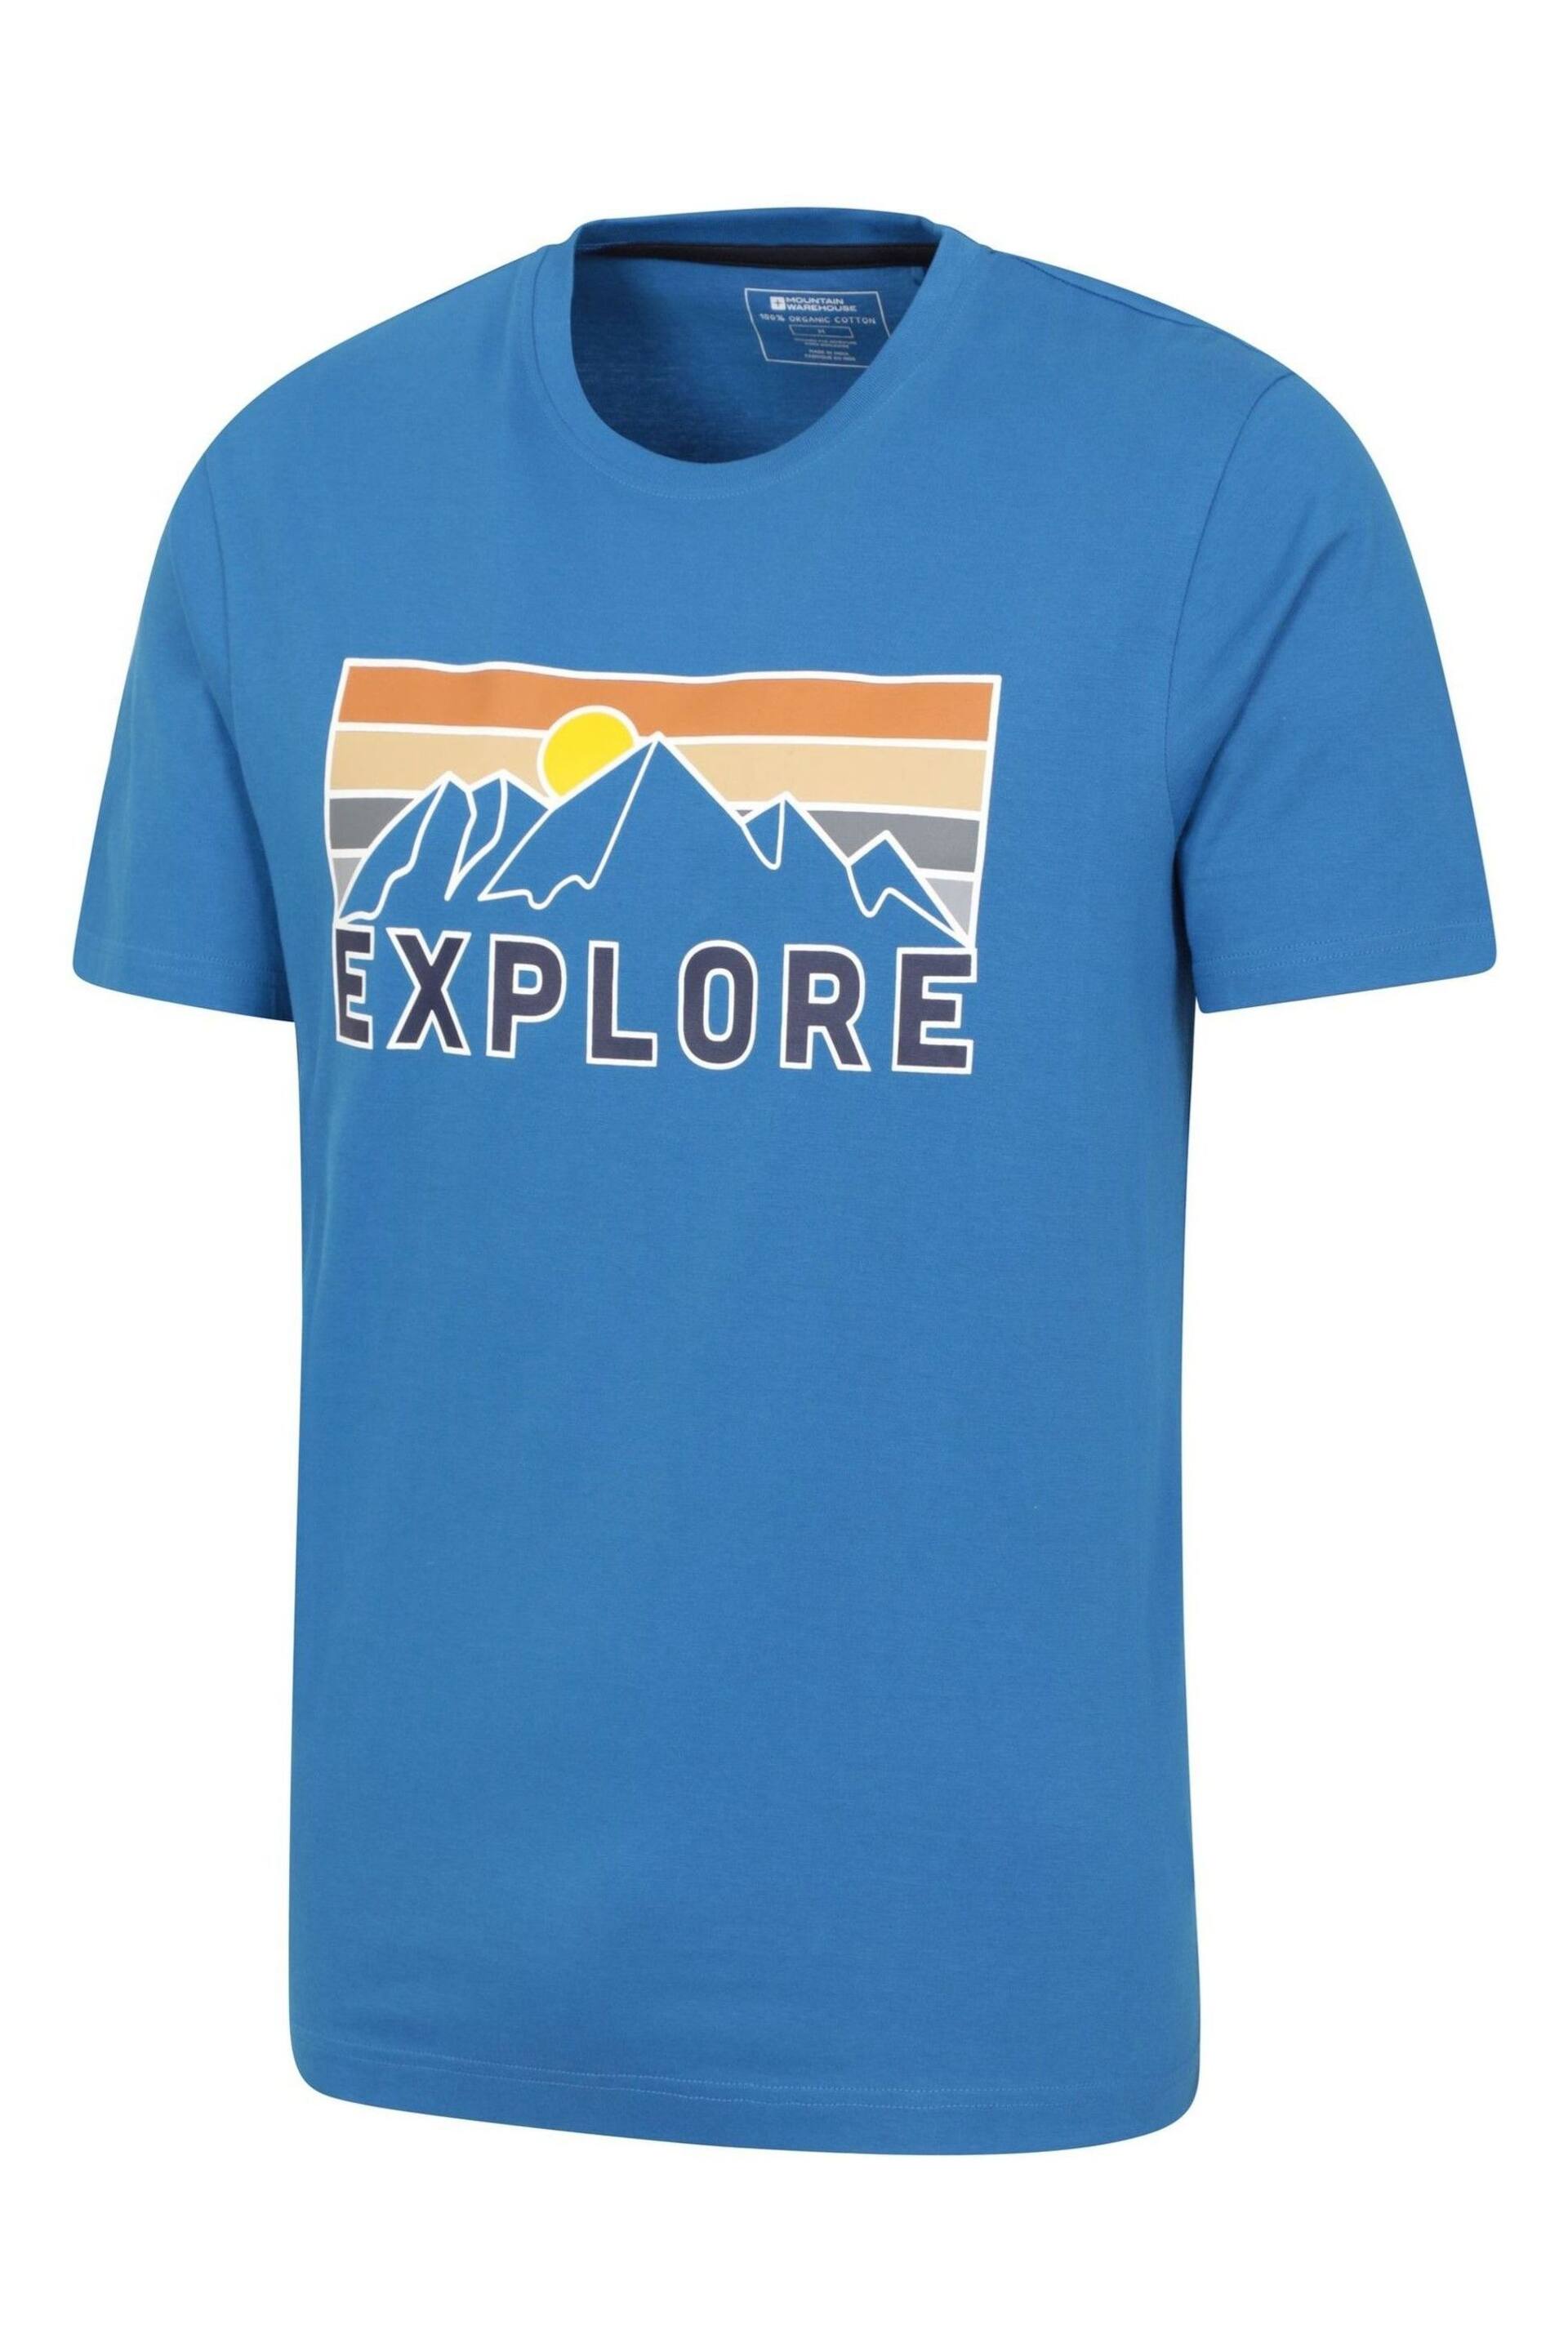 Mountain Warehouse Blue Explore Mens Organic T-Shirt - Image 3 of 5